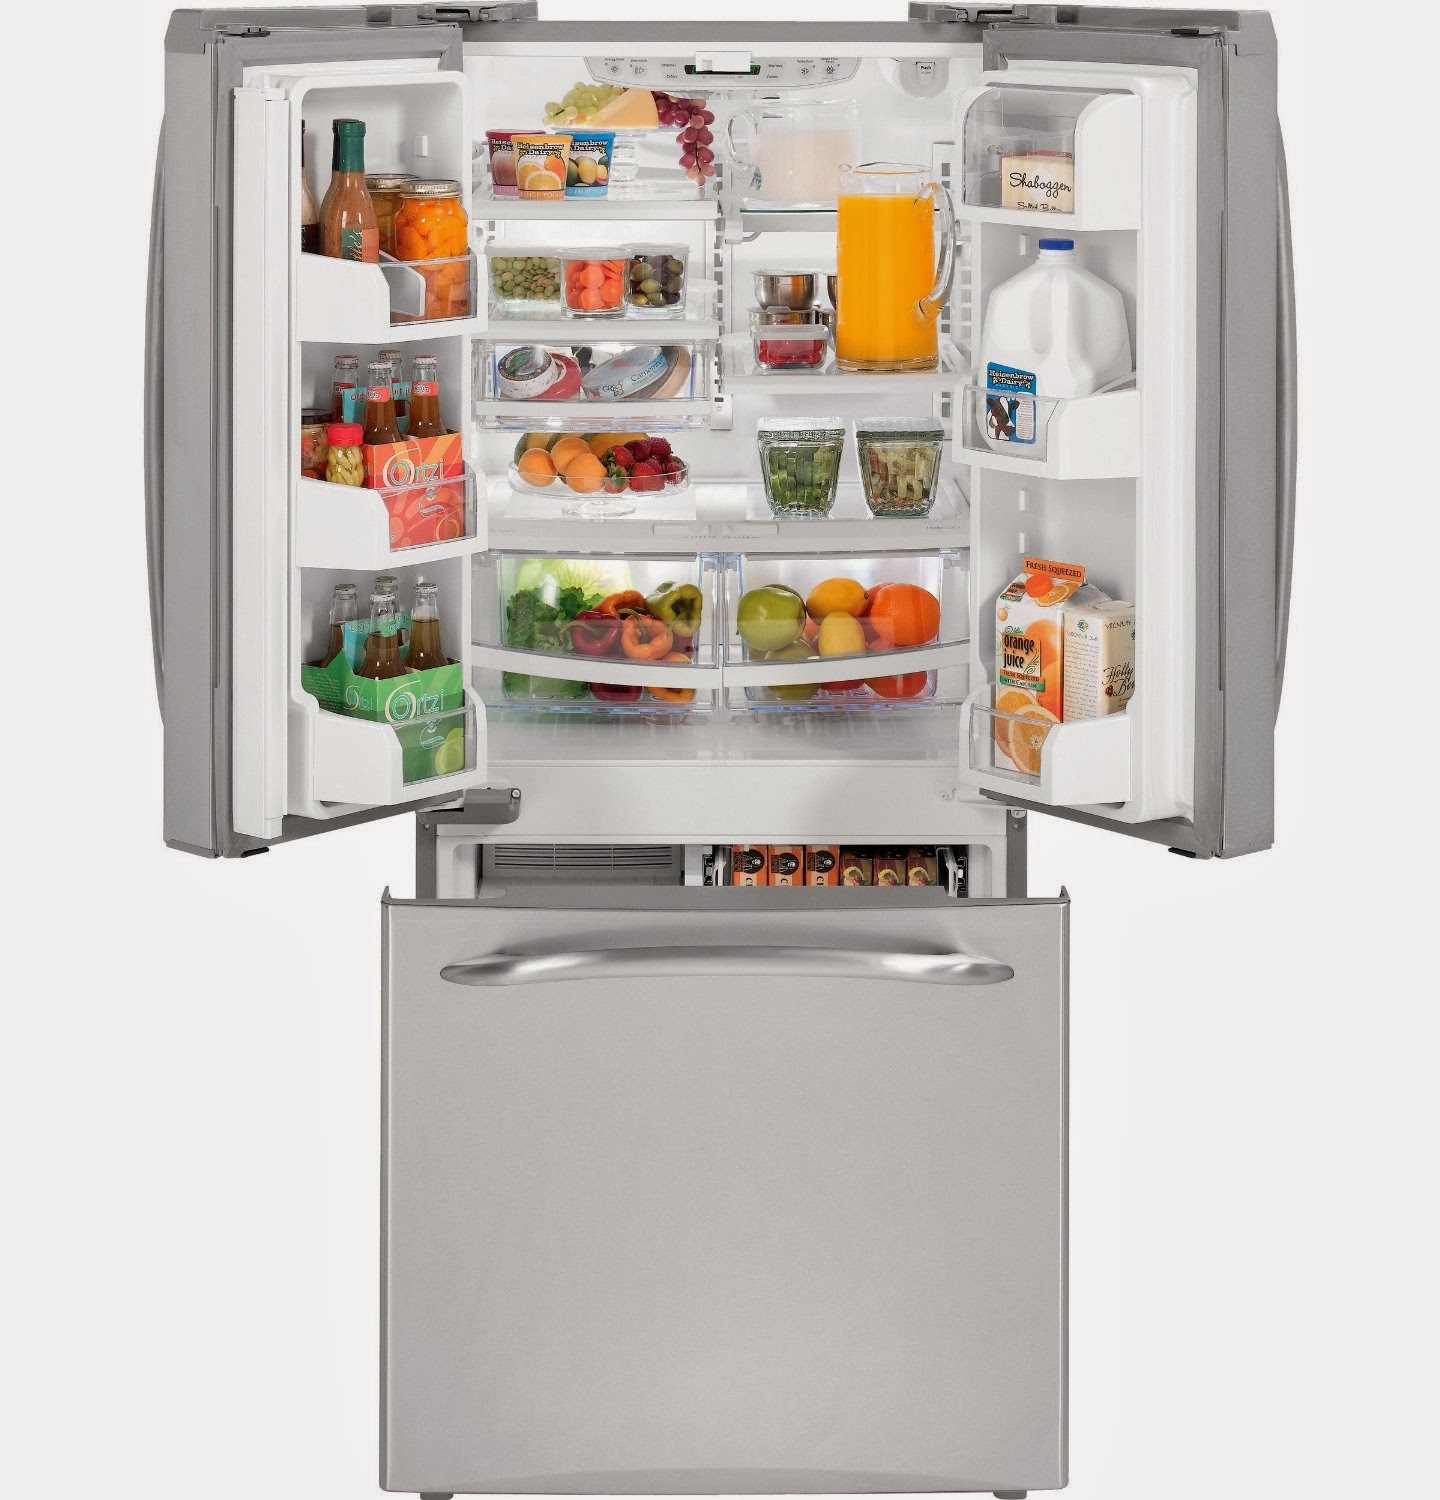 General Electric Refrigerator: General Electric Bottom Freezer Refrigerator